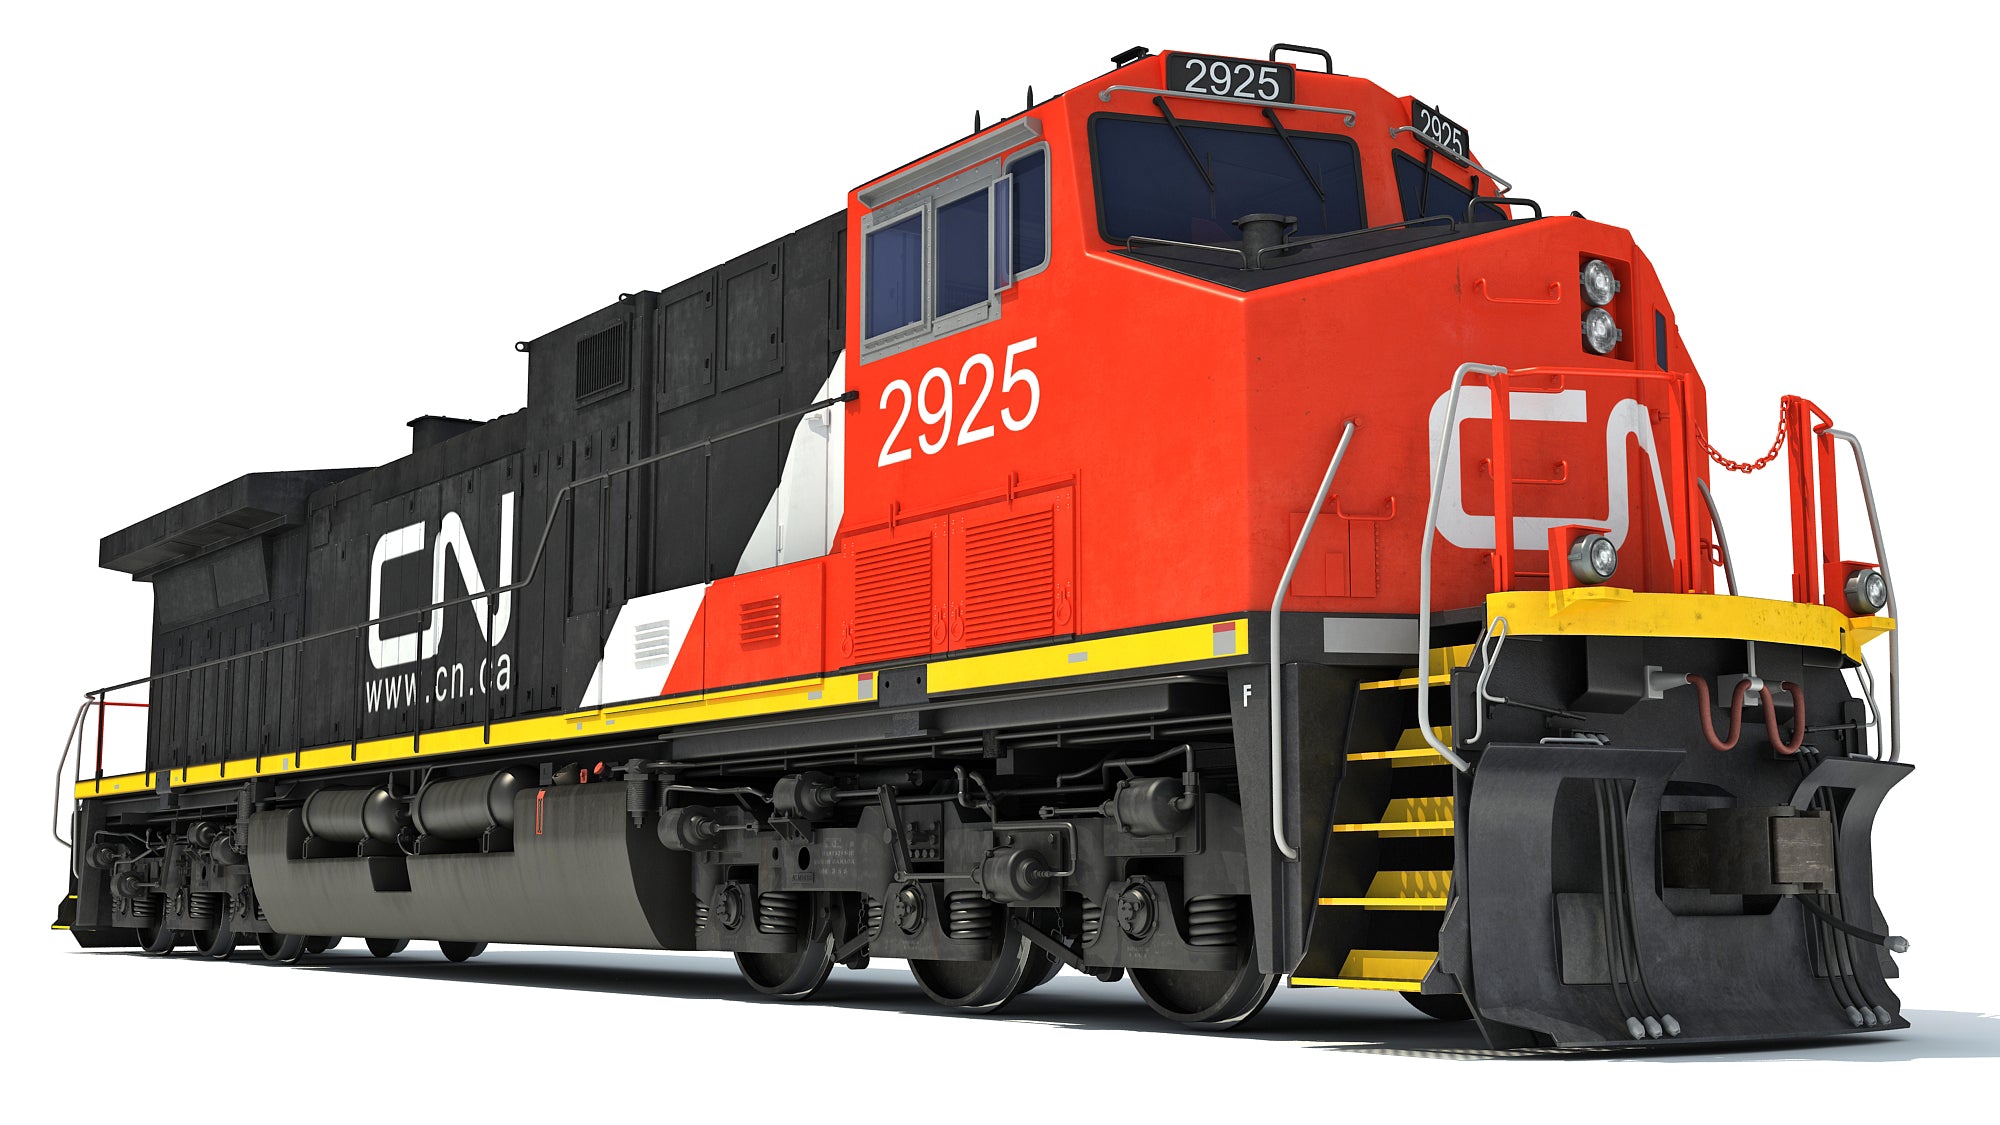 Canadian National Locomotive